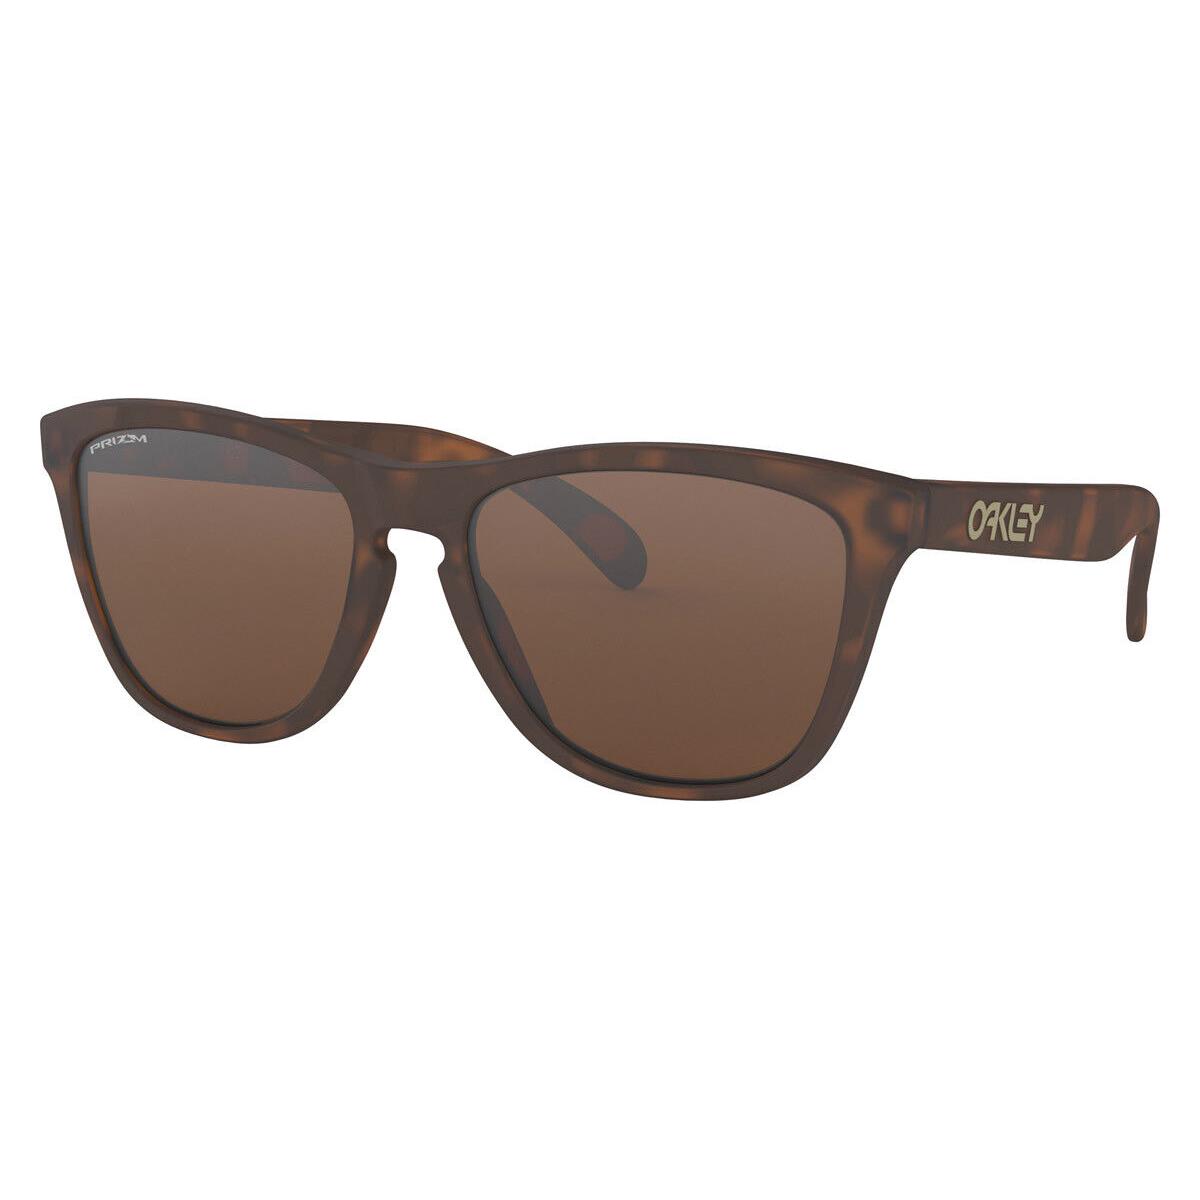 Oakley OO9013 Sunglasses Men Havana Square 55mm